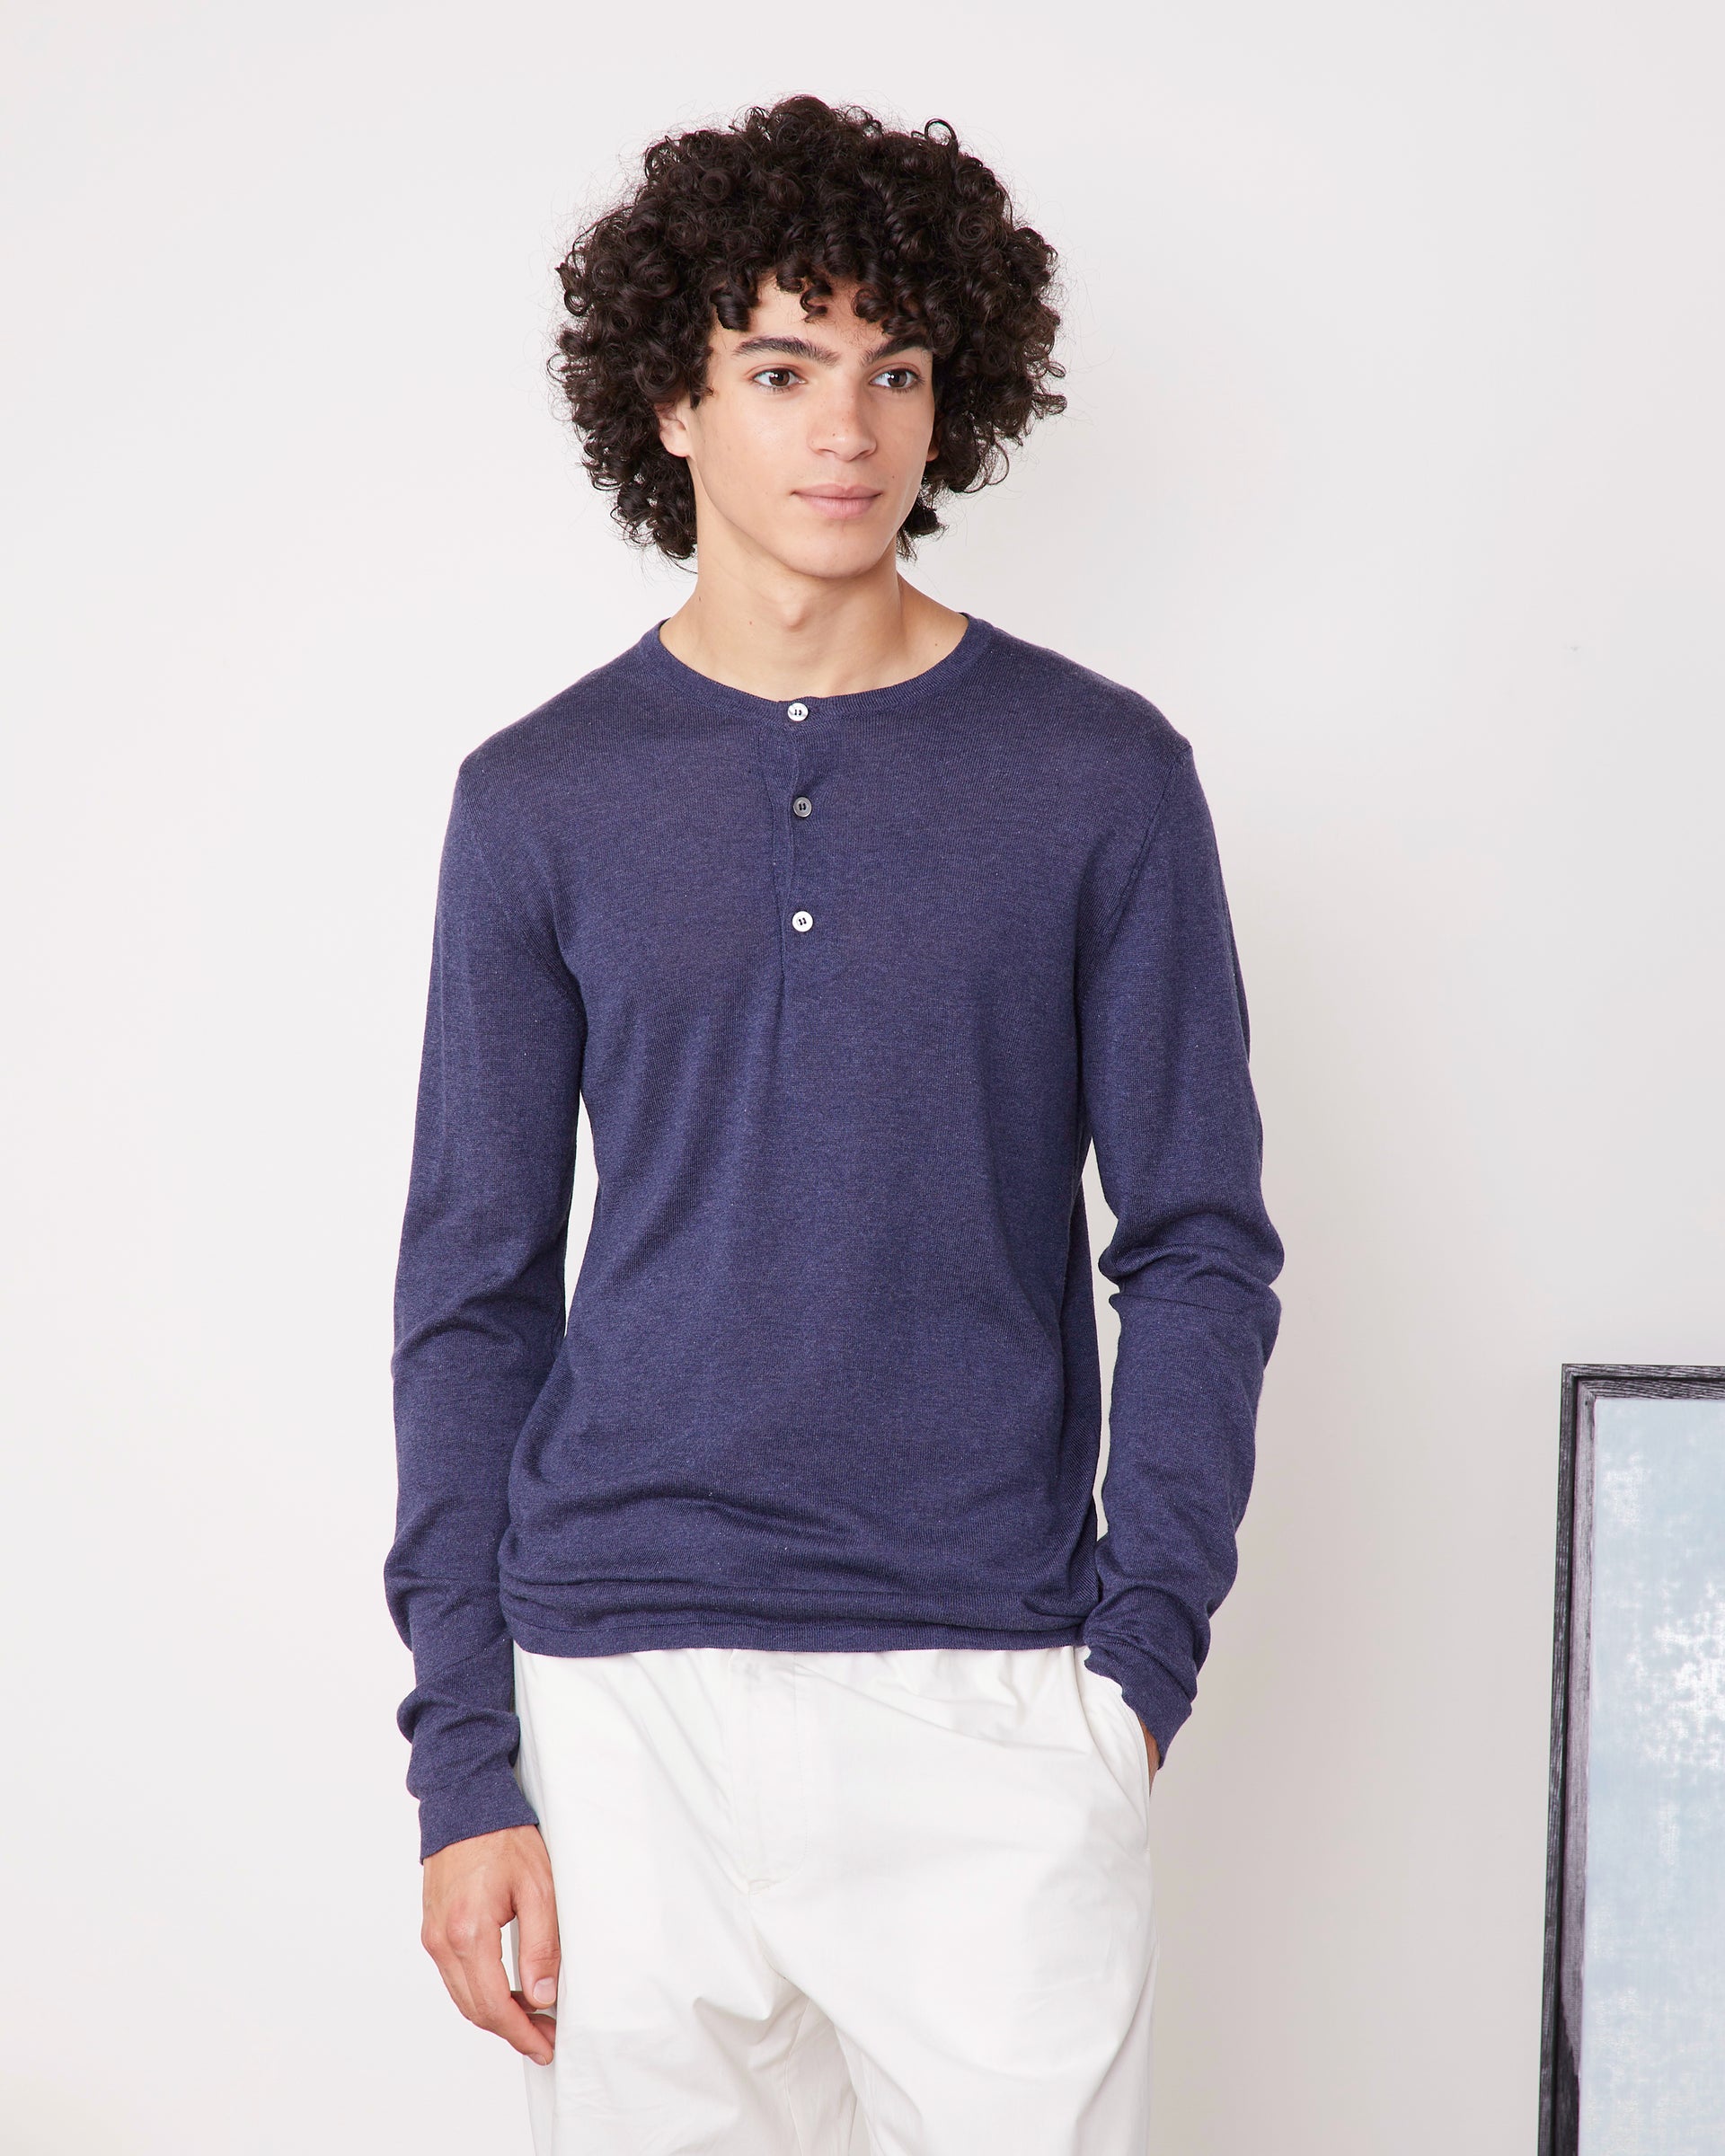 Hansel sweater - Image 2